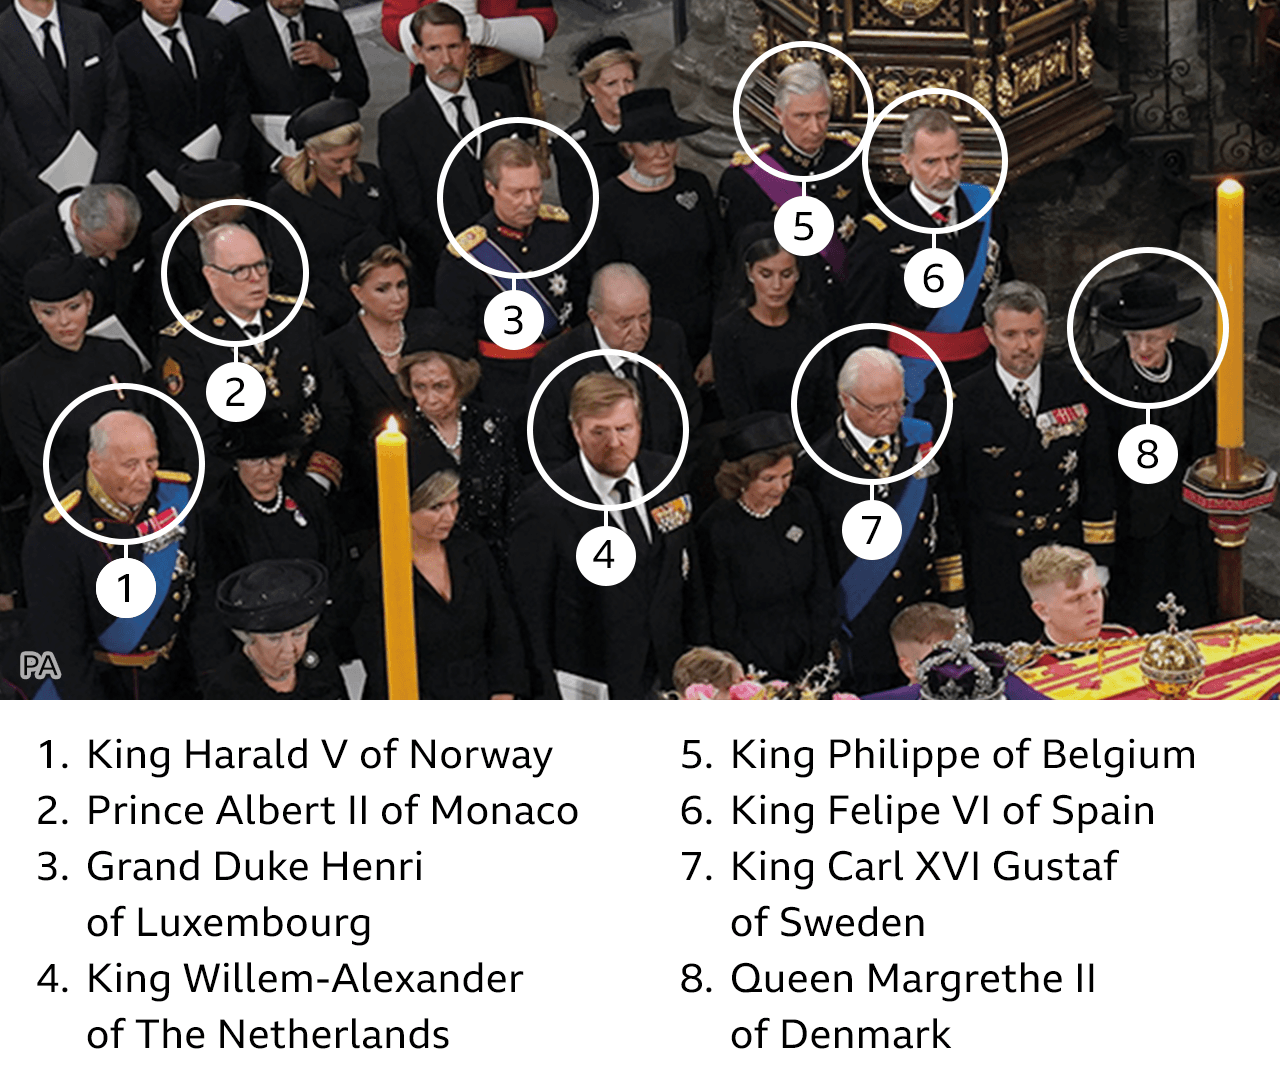 King Harald V of Norway, Prince Albert II of Monaco, Grand Duke Henri of Luxembourg, King Willem-Alexander of The Netherlands, King Philippe of Belgium, King Felipe VI of Spain, King Carl XVI Gustaf of Sweden, Queen Margrethe II of Denmark.